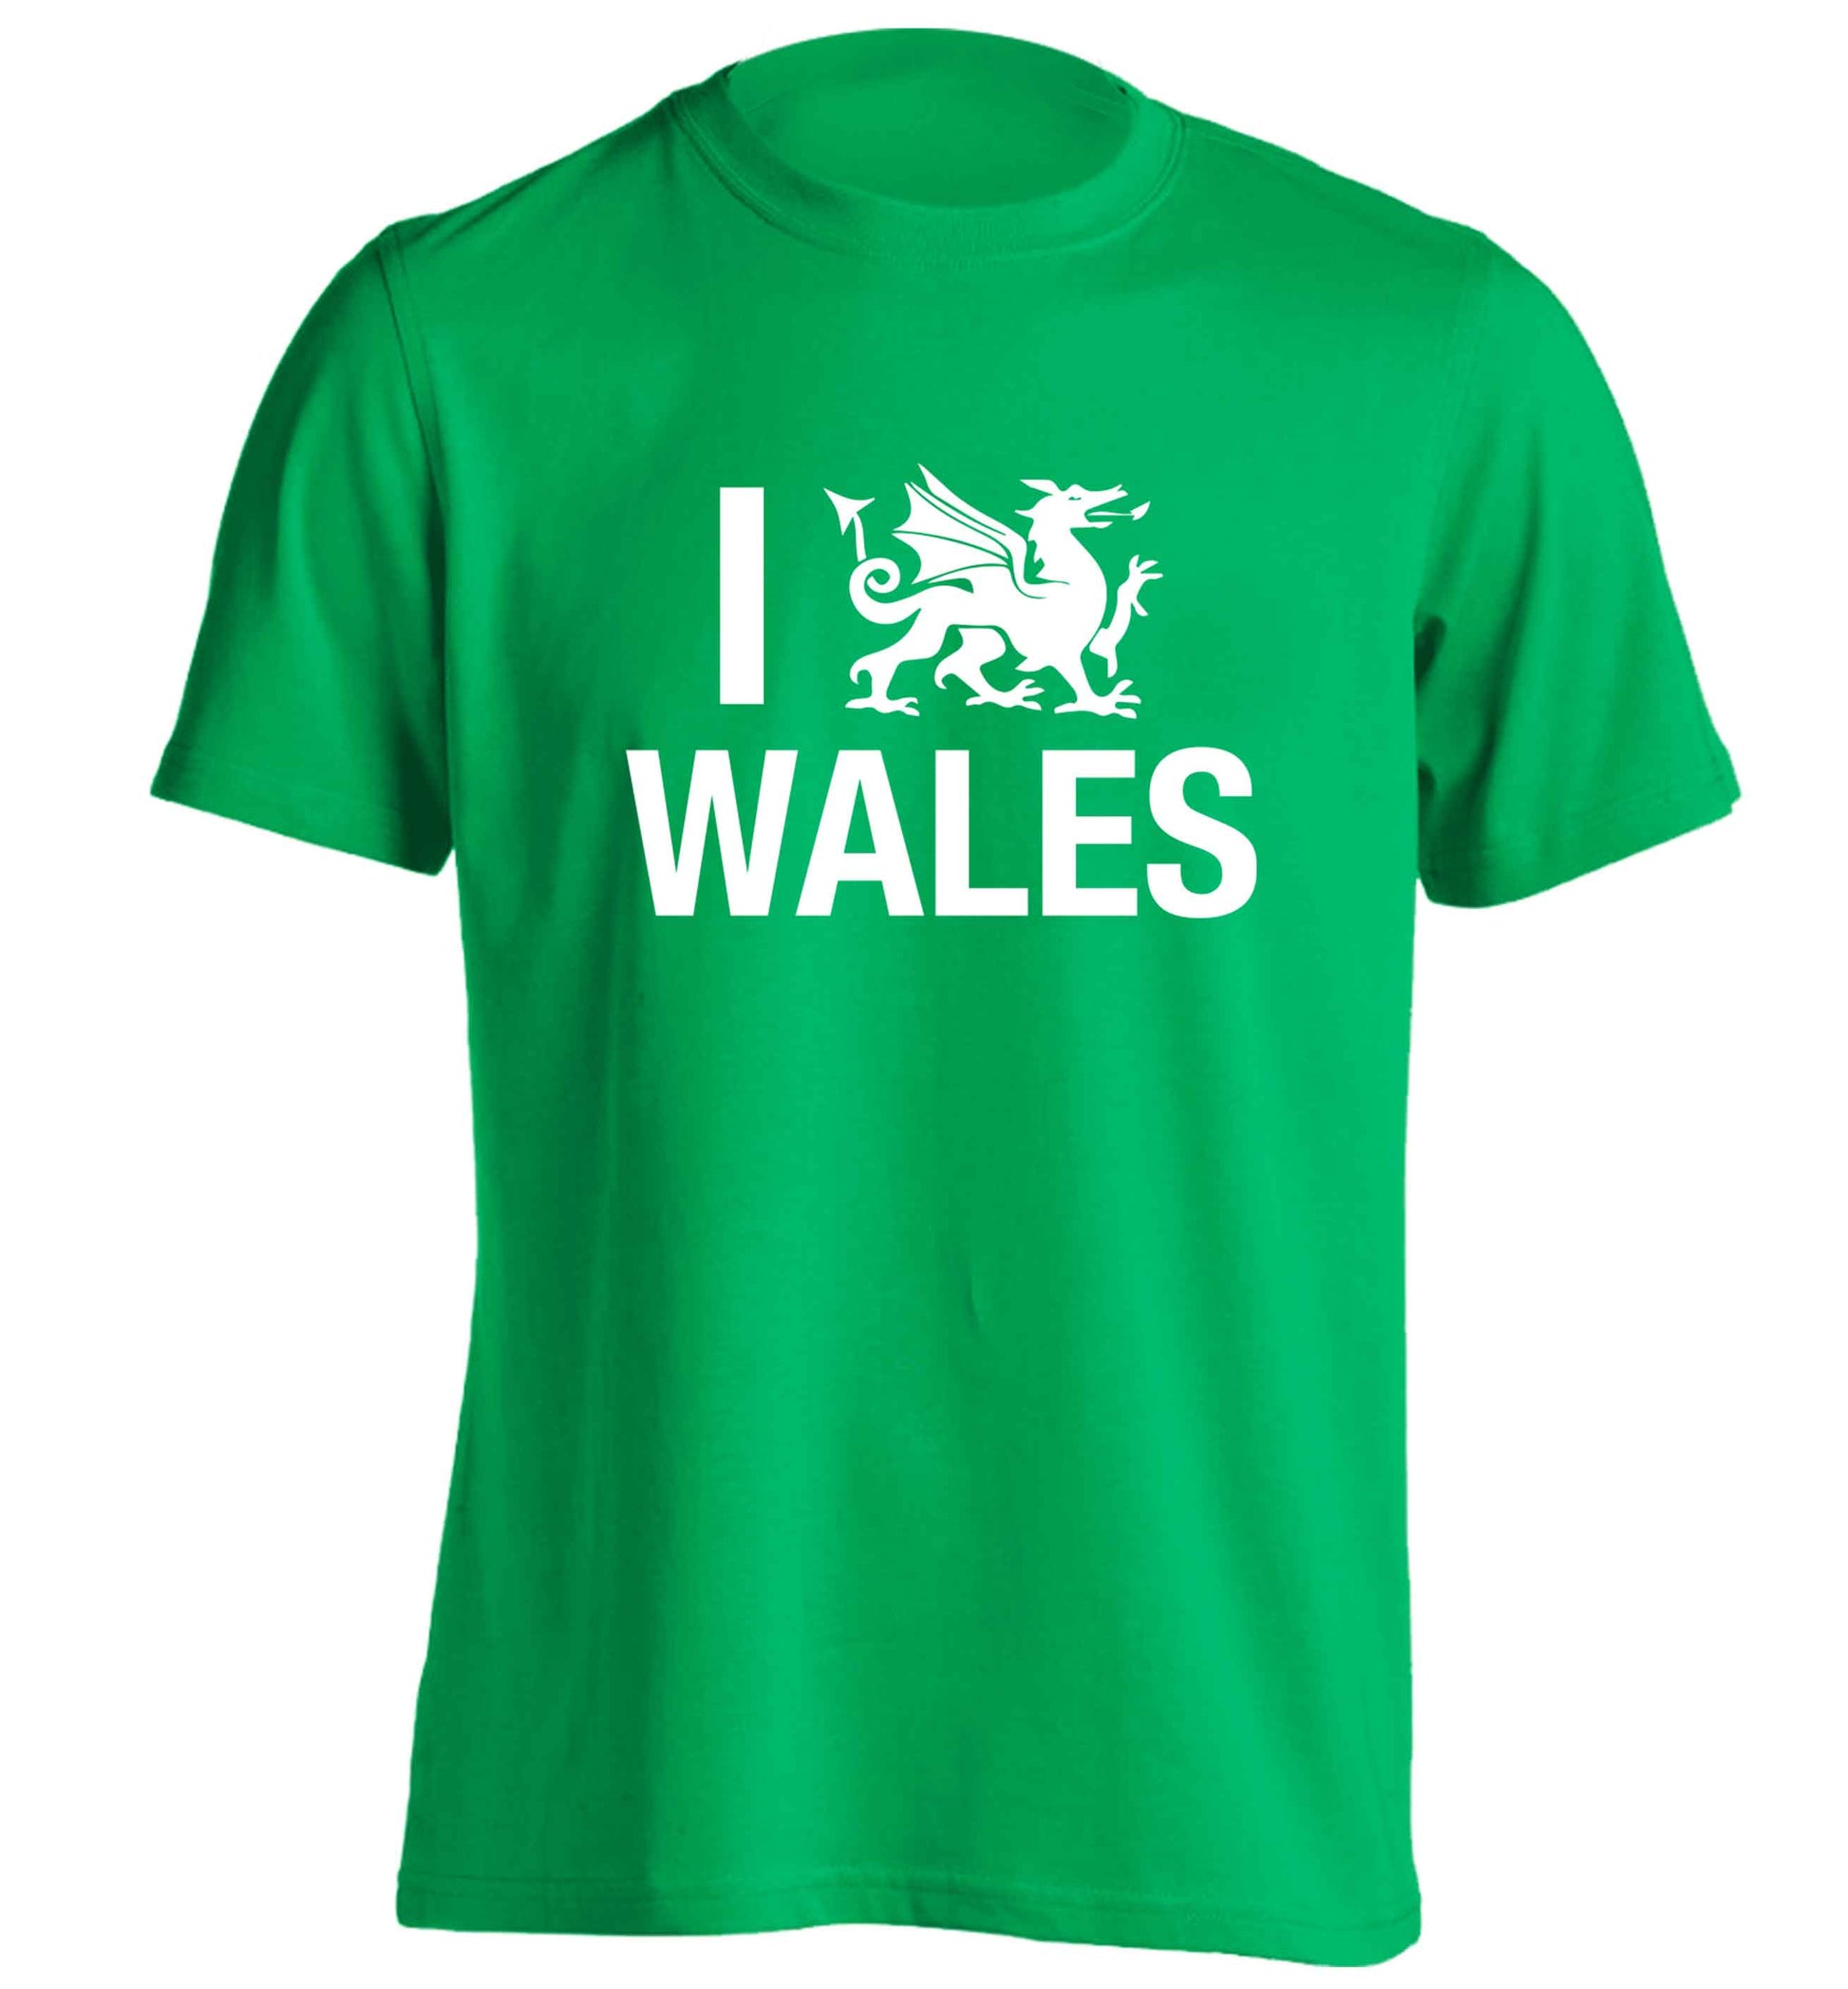 I love Wales adults unisex green Tshirt 2XL